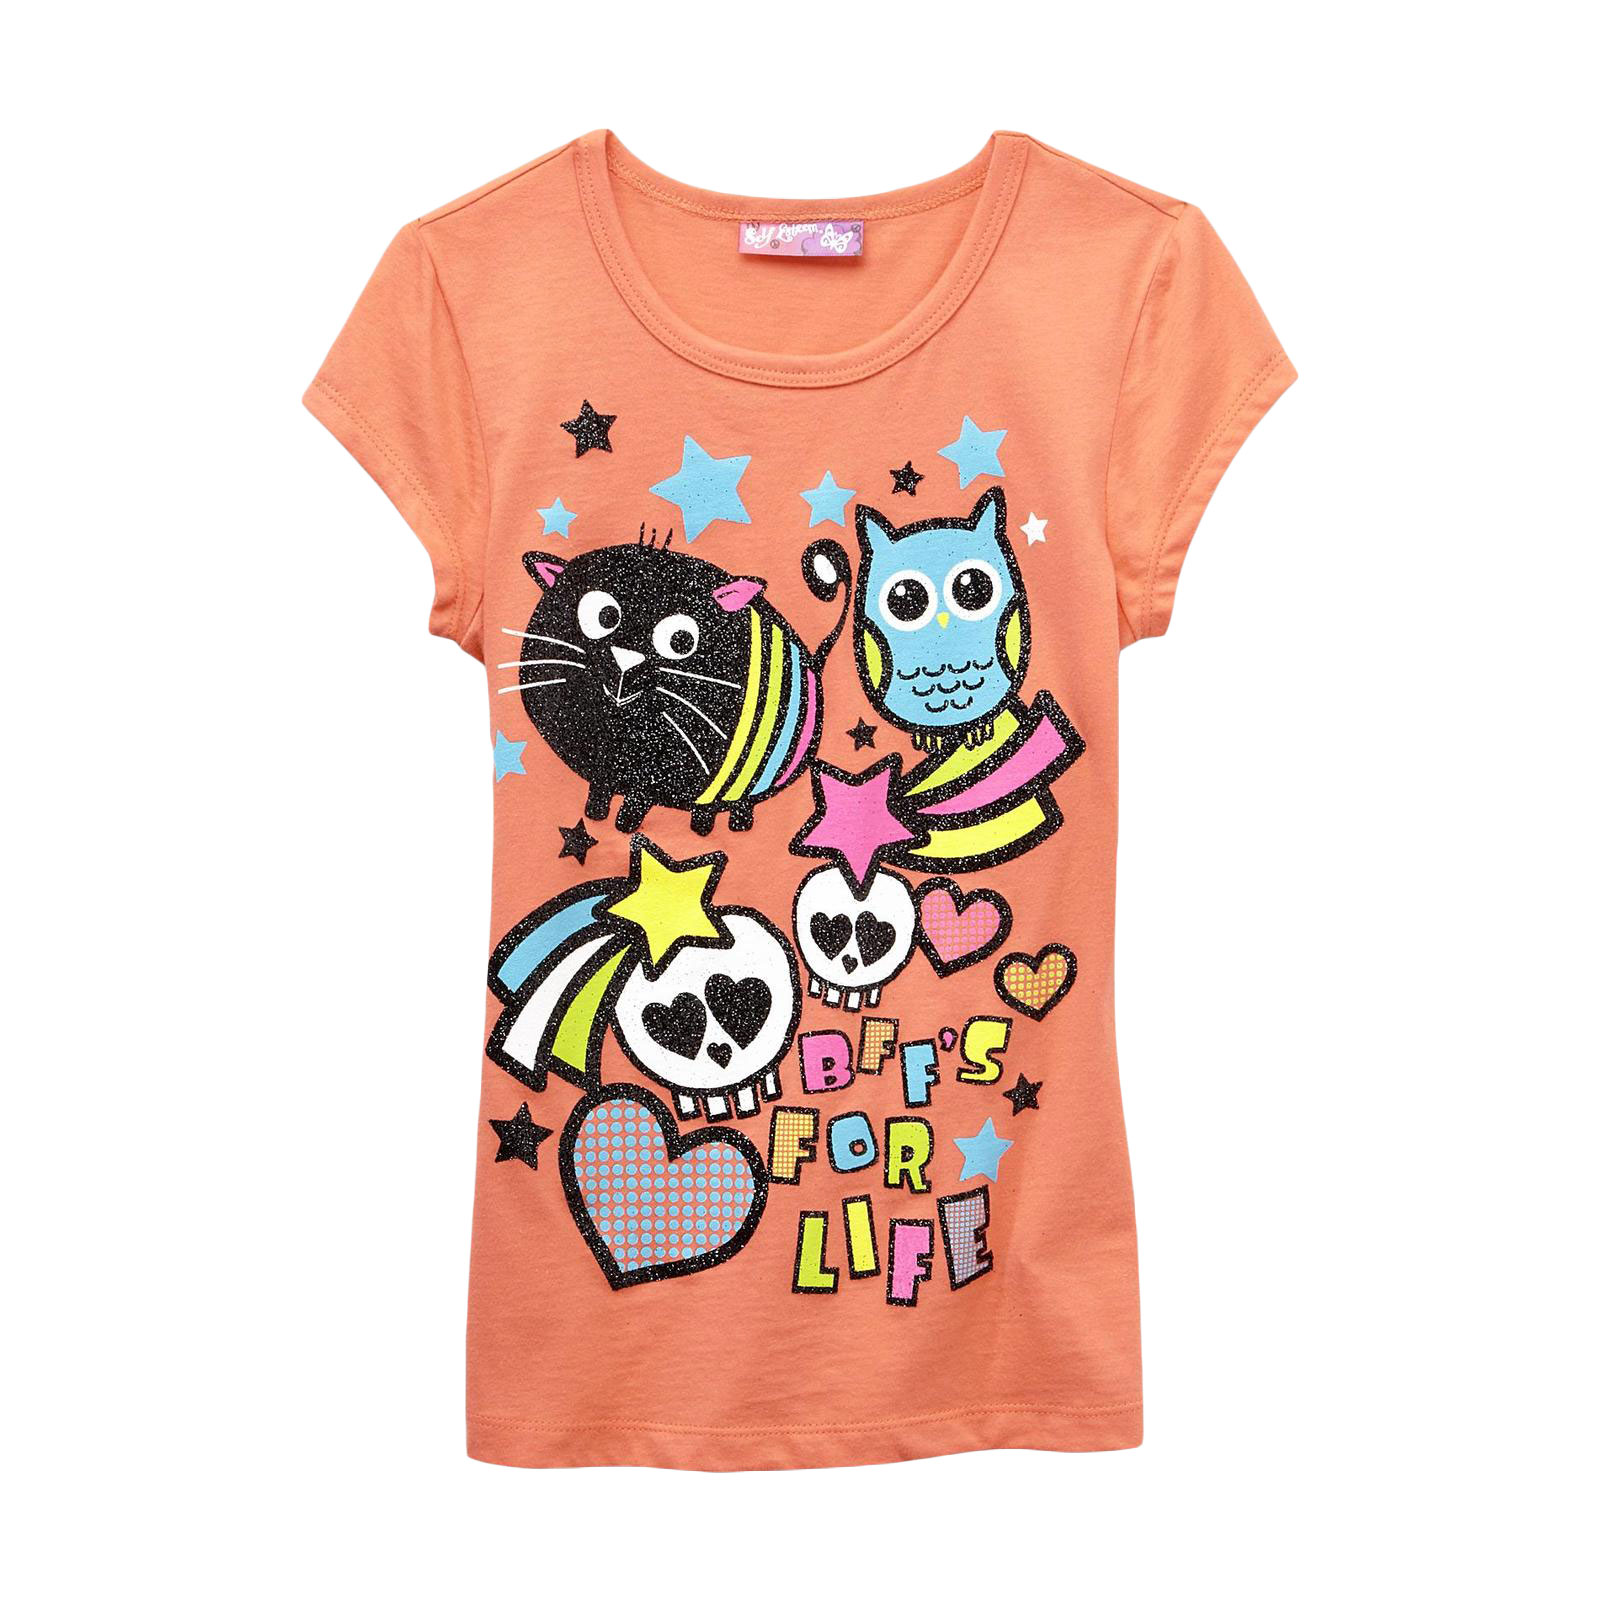 Self Esteem Girl's Graphic T-Shirt - BFF's